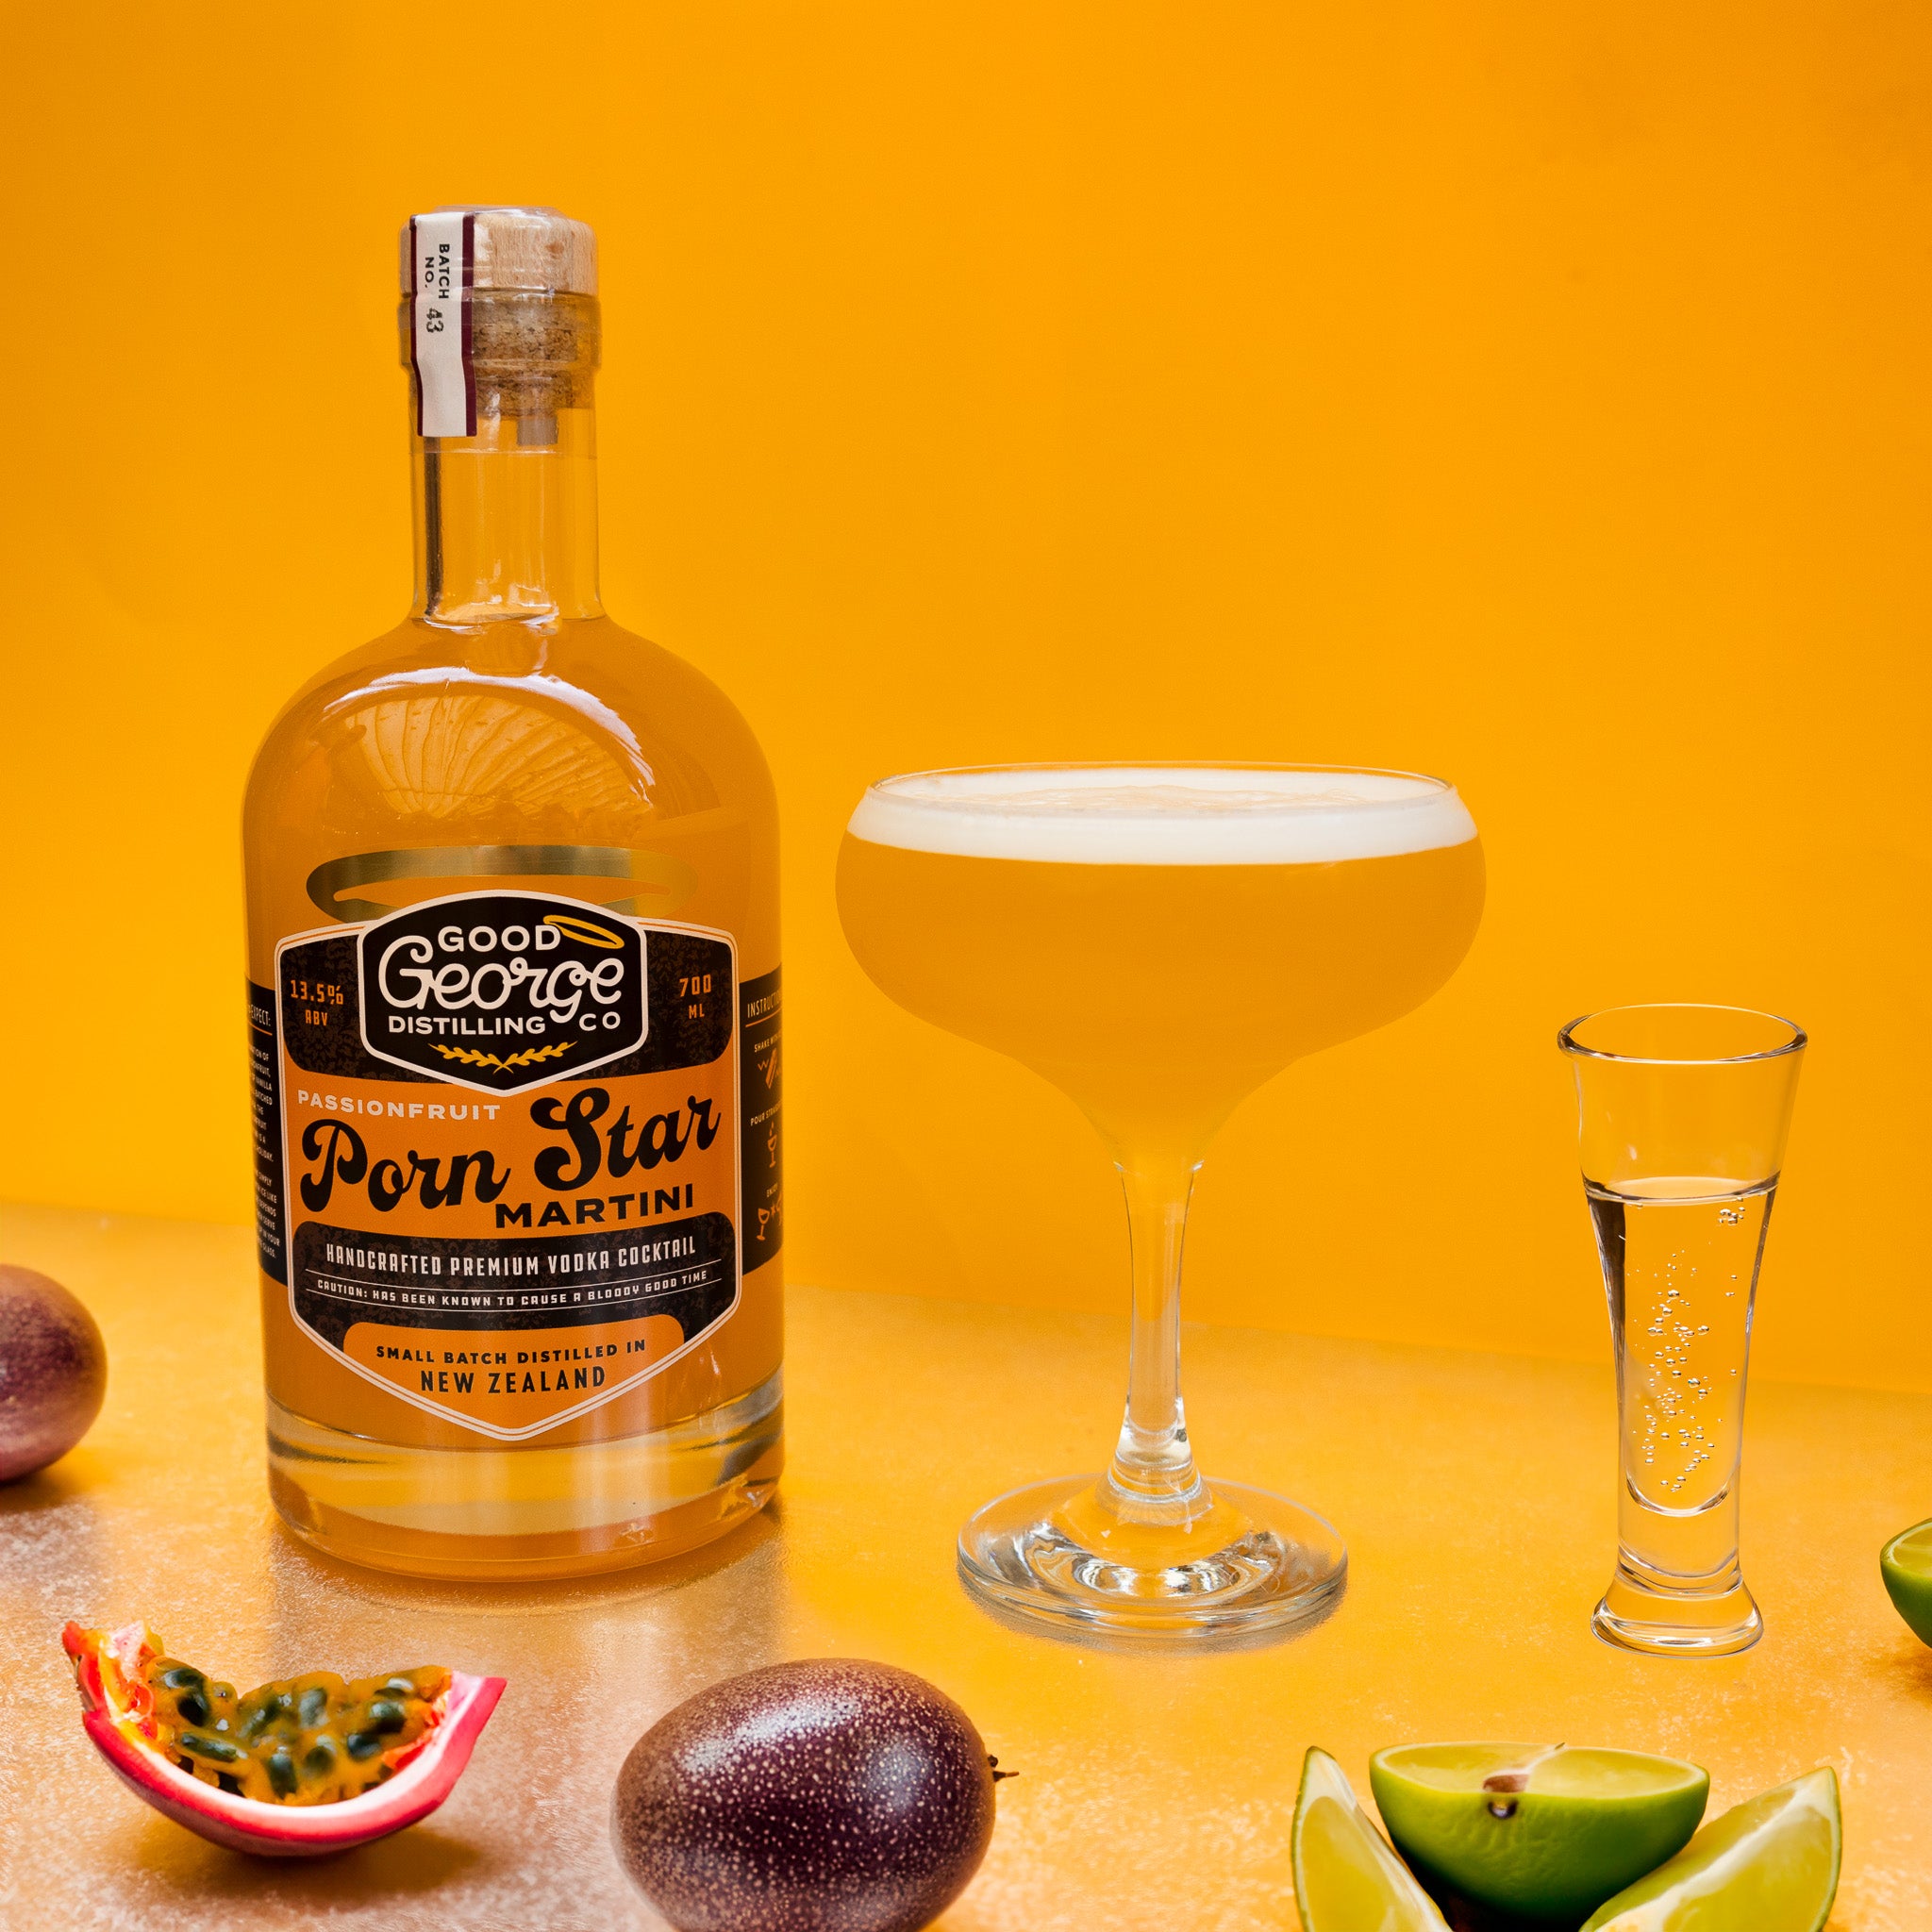 Passionfruit Porn Star Martini